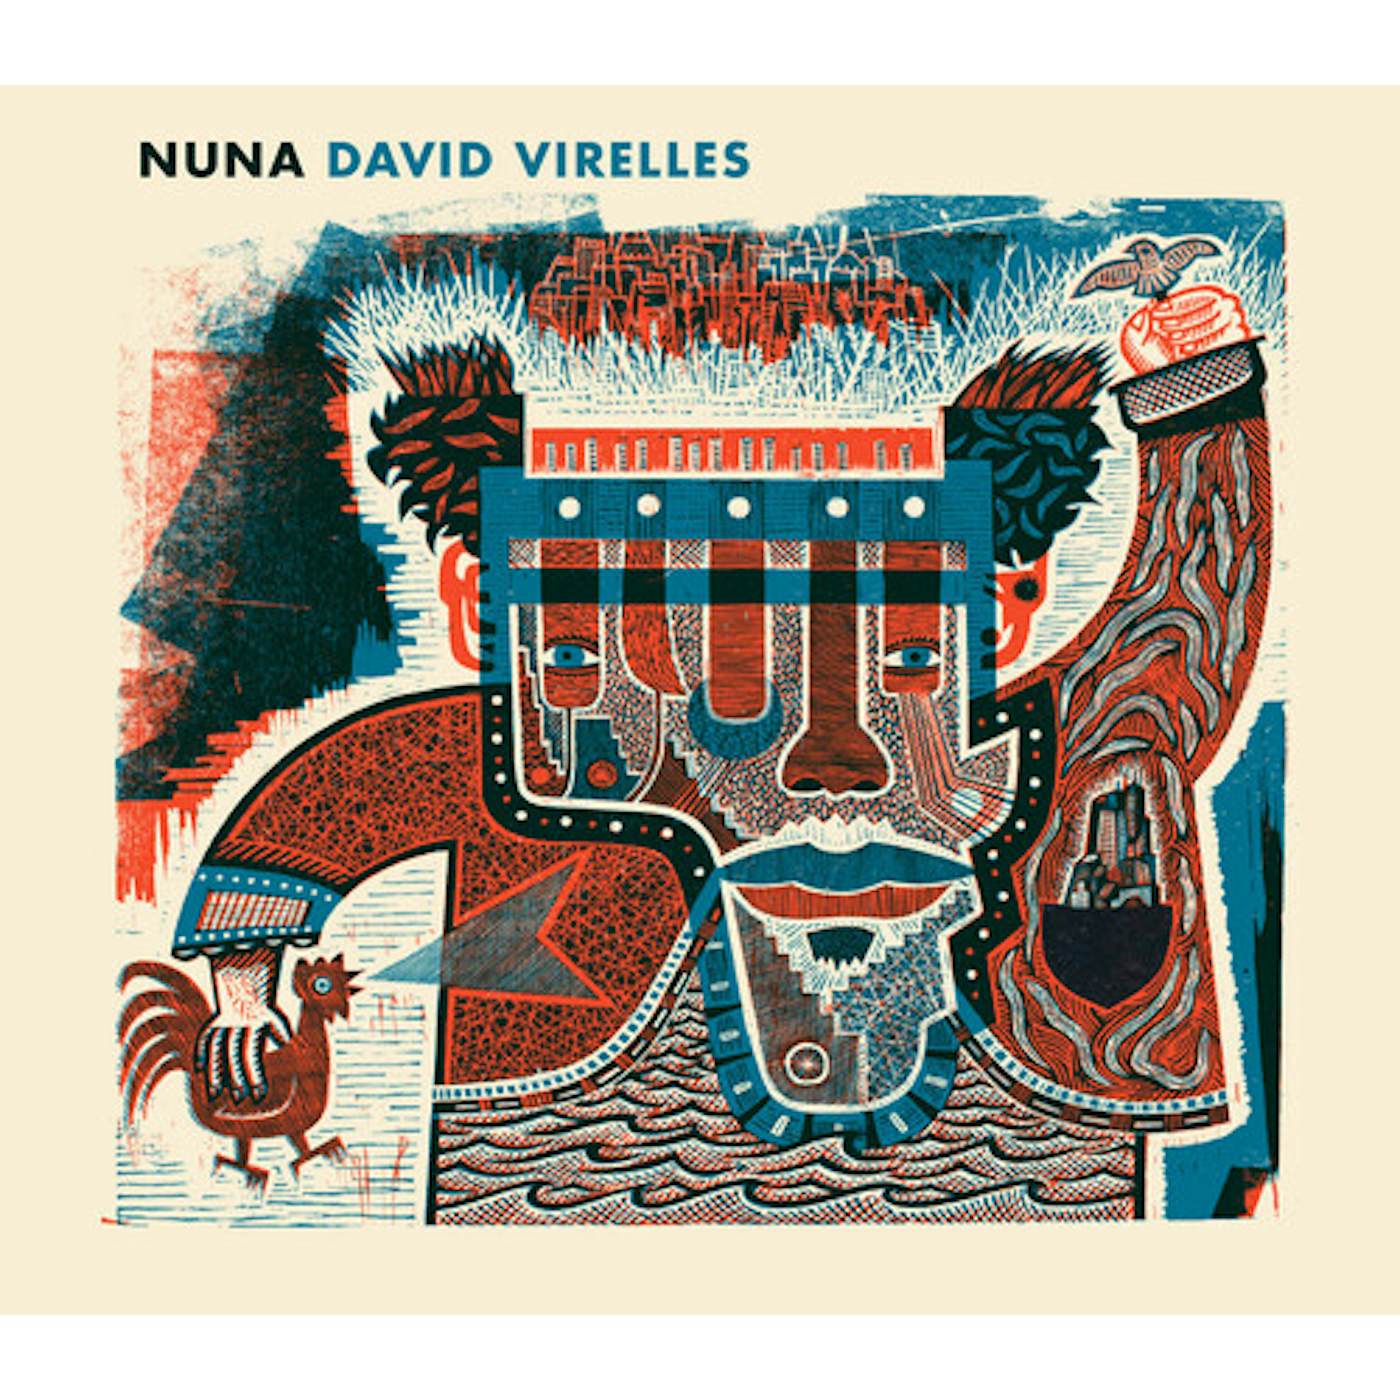 David Virelles NUNA CD